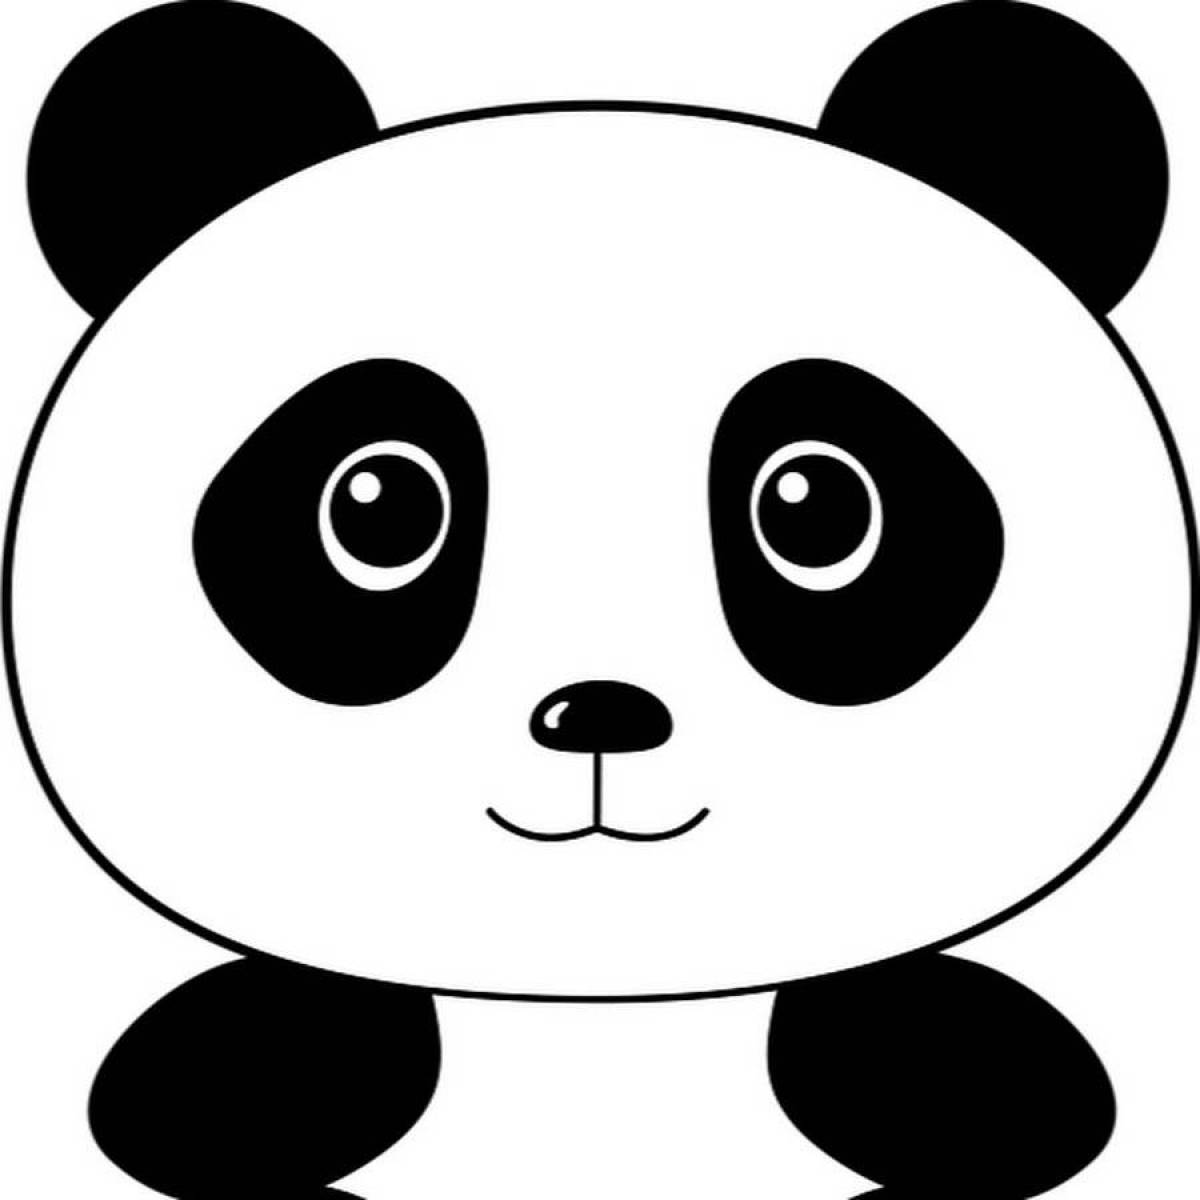 Coloring page funny panda